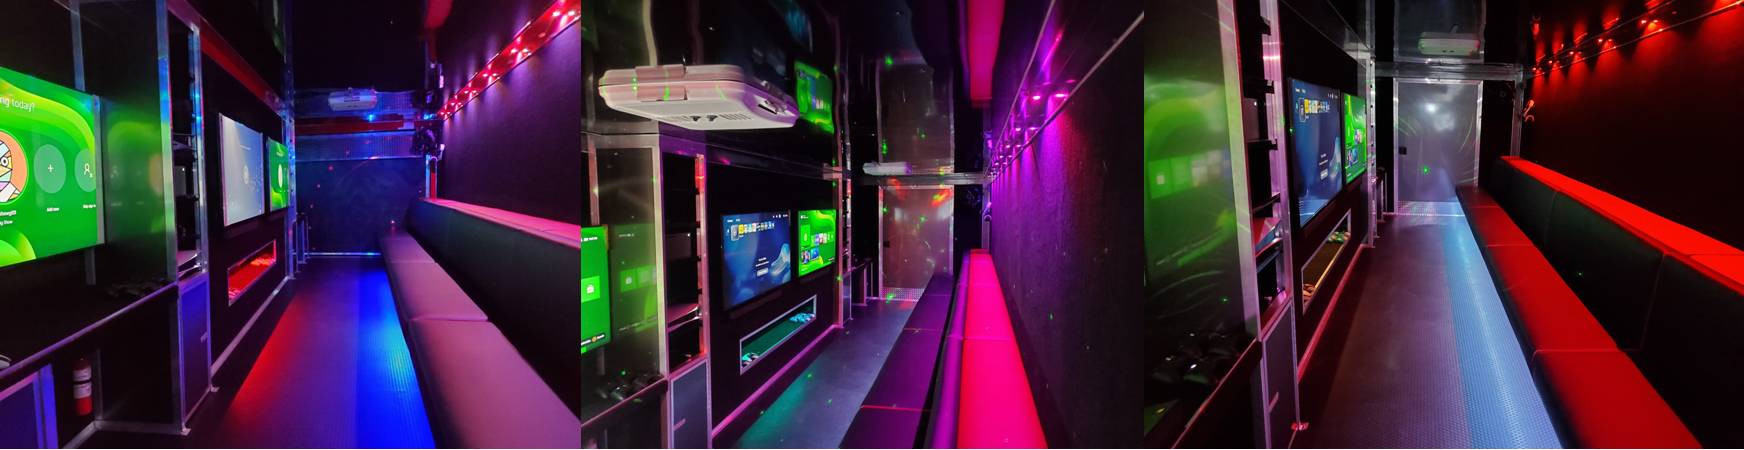 Atlanta video game truck interior